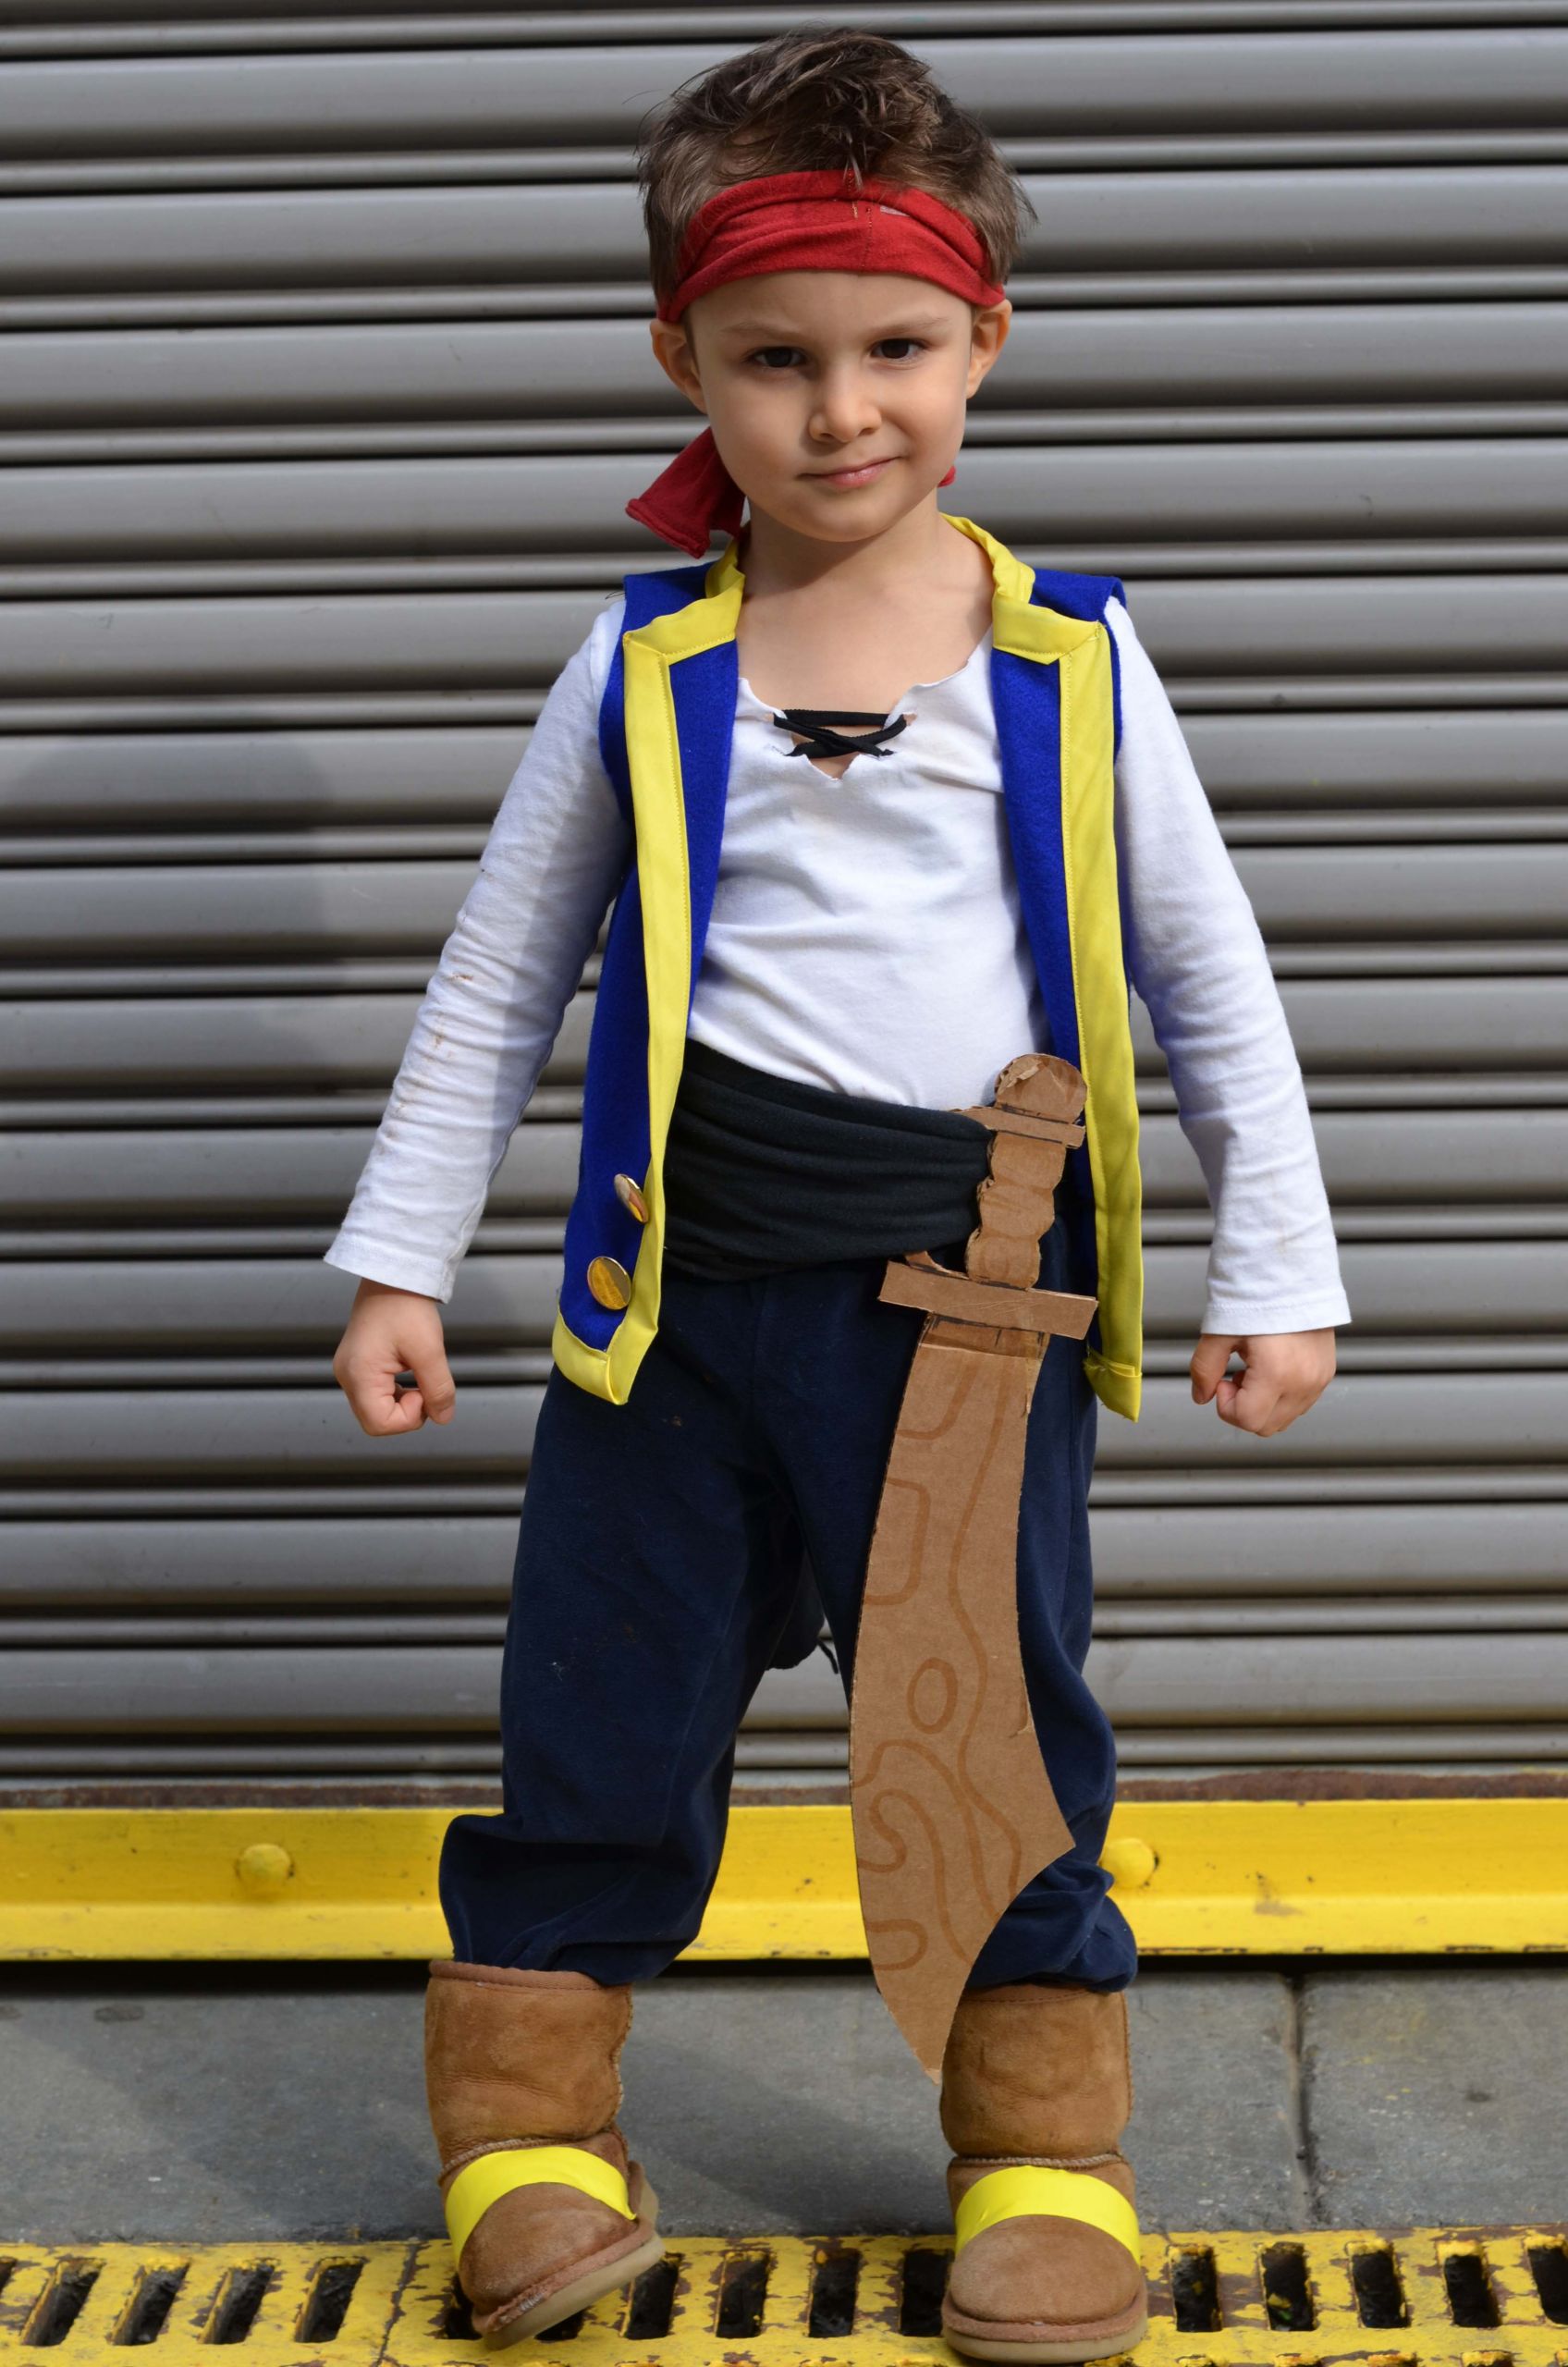 DIY Toddler Pirate Costume
 DIY Halloween Costumes for Kids